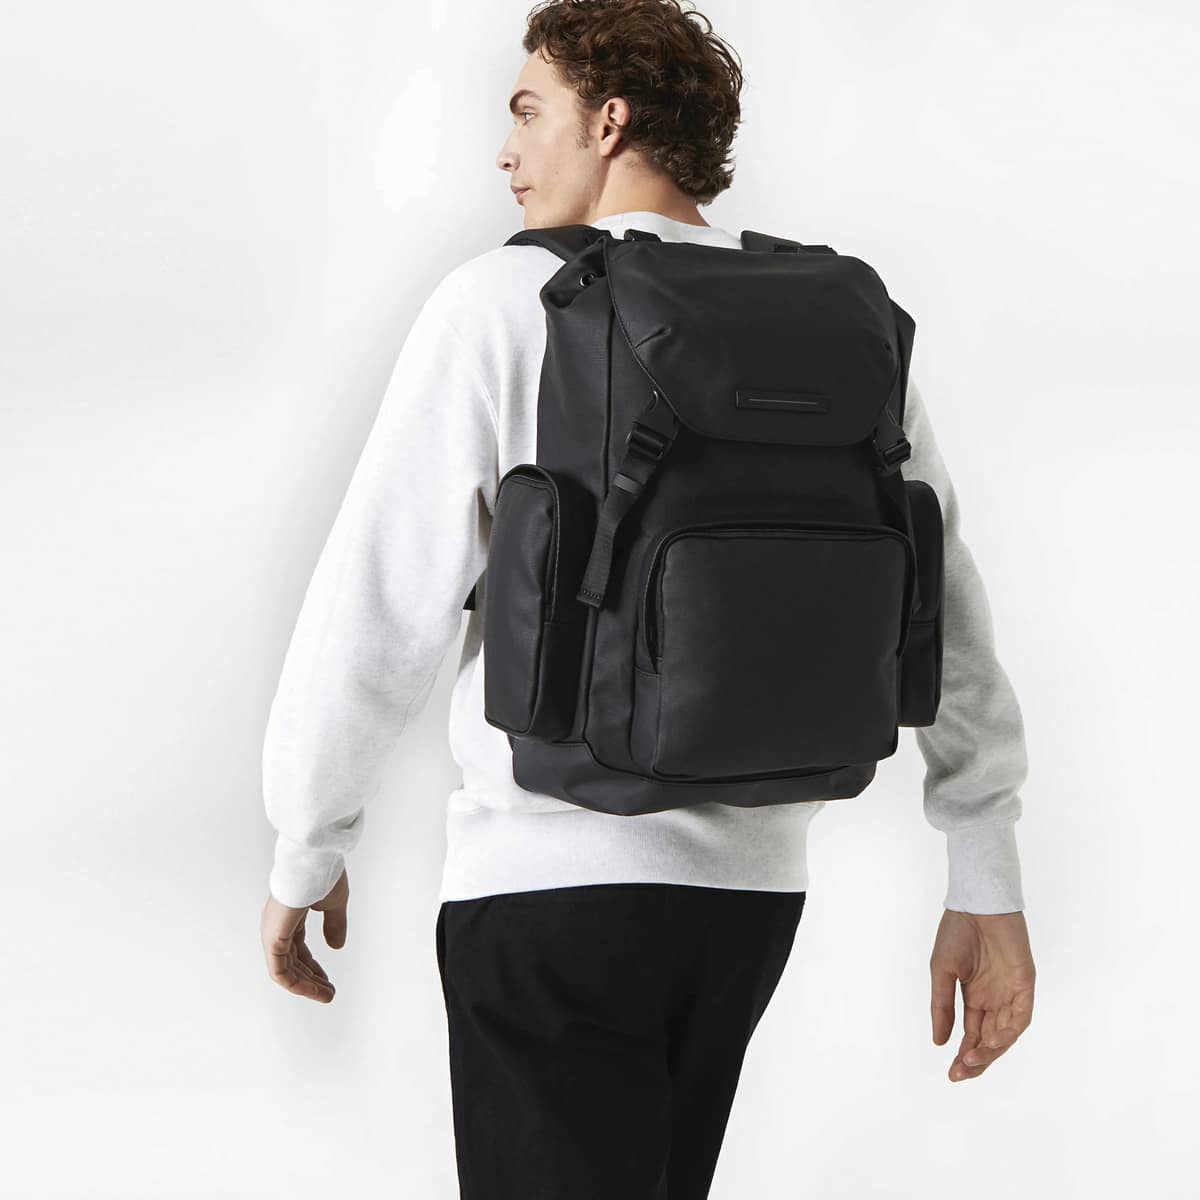 Vegan carry-on backpack